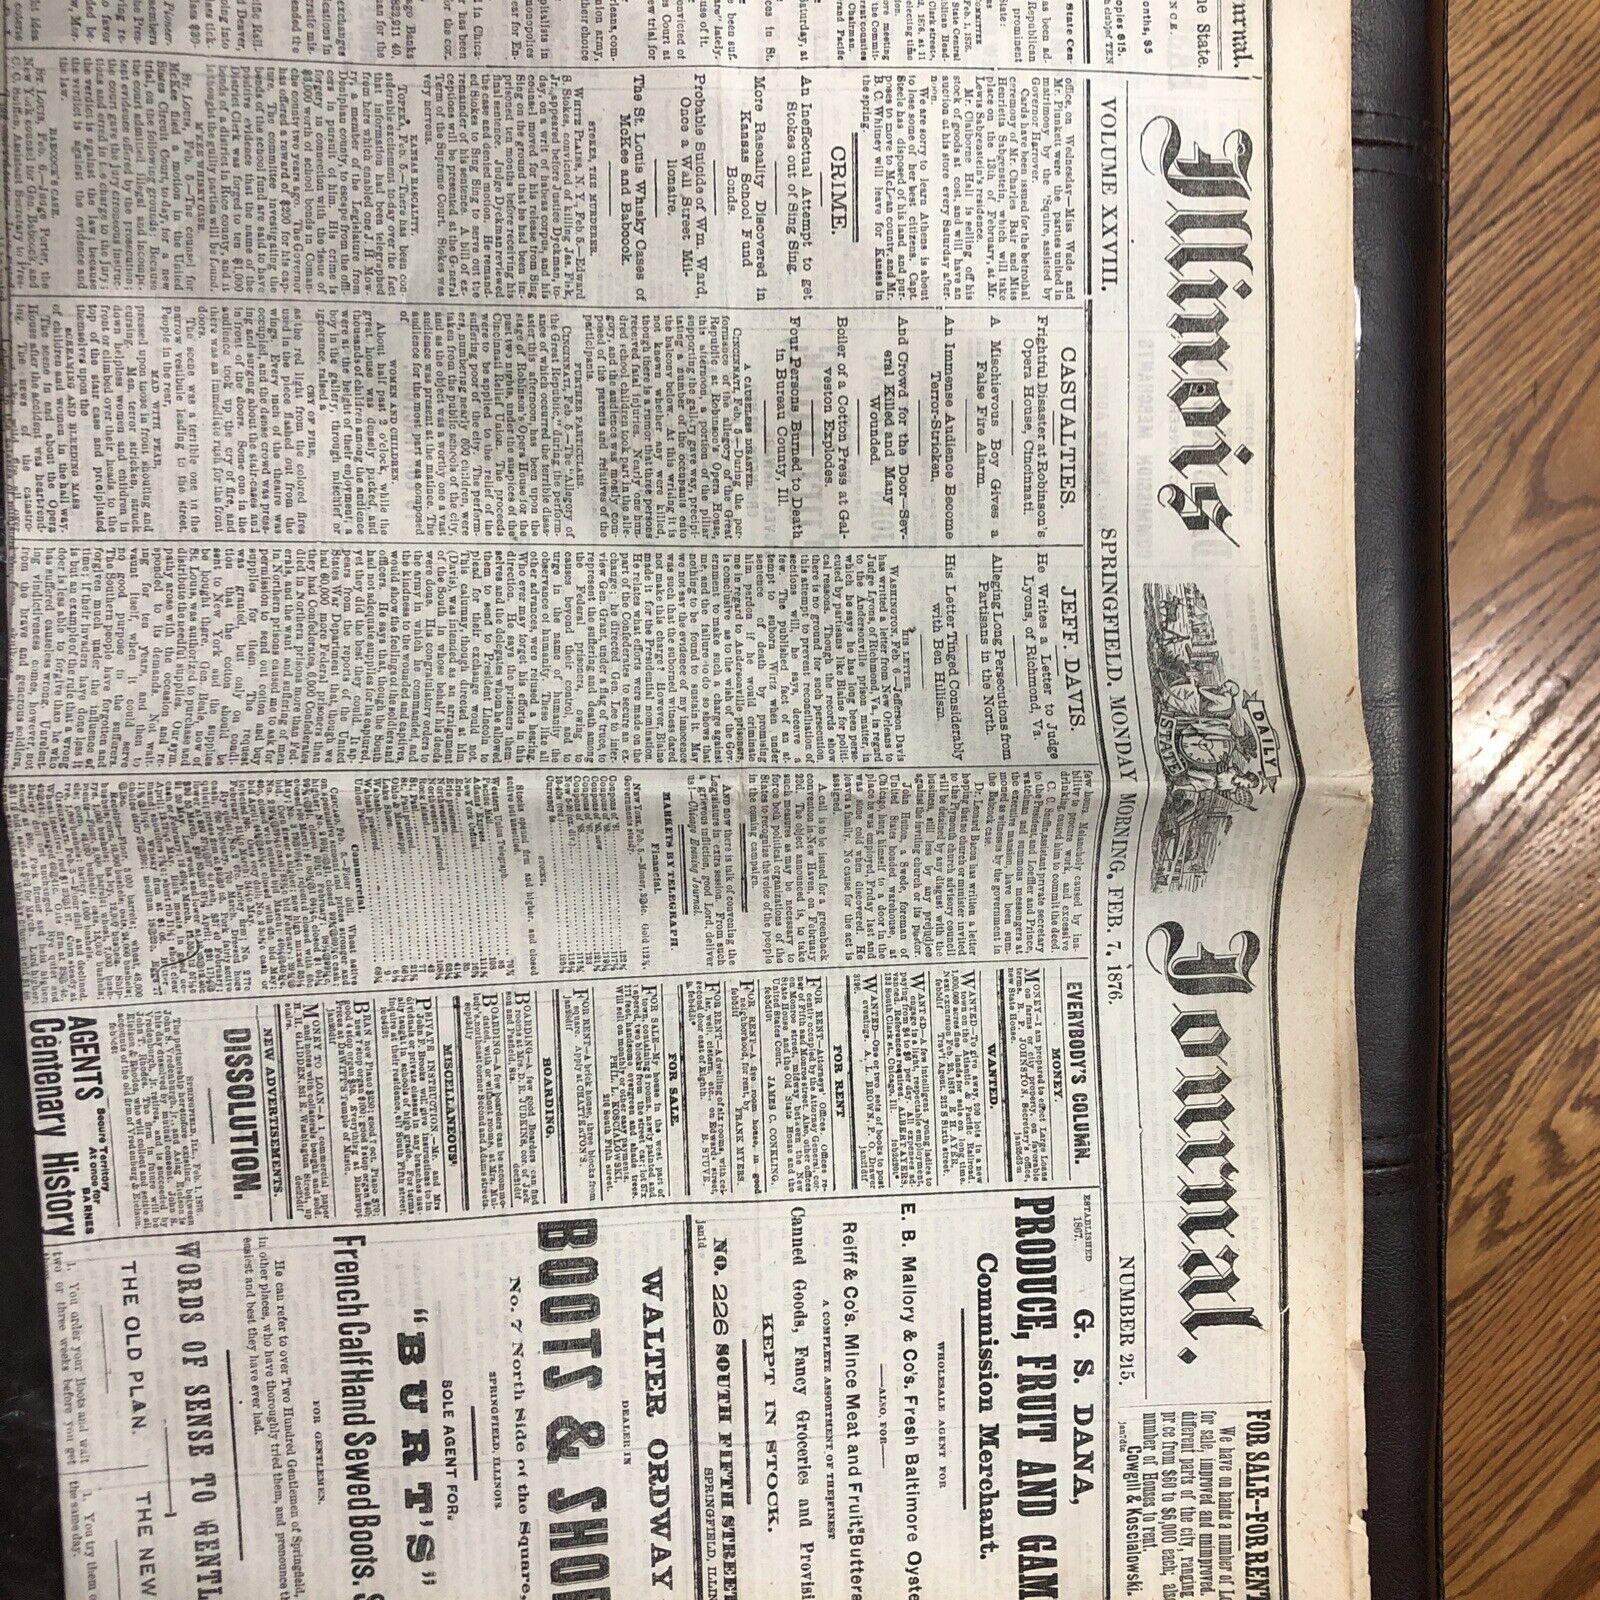 Monday Feb 7, 1876 Illnois Newspaper Journal